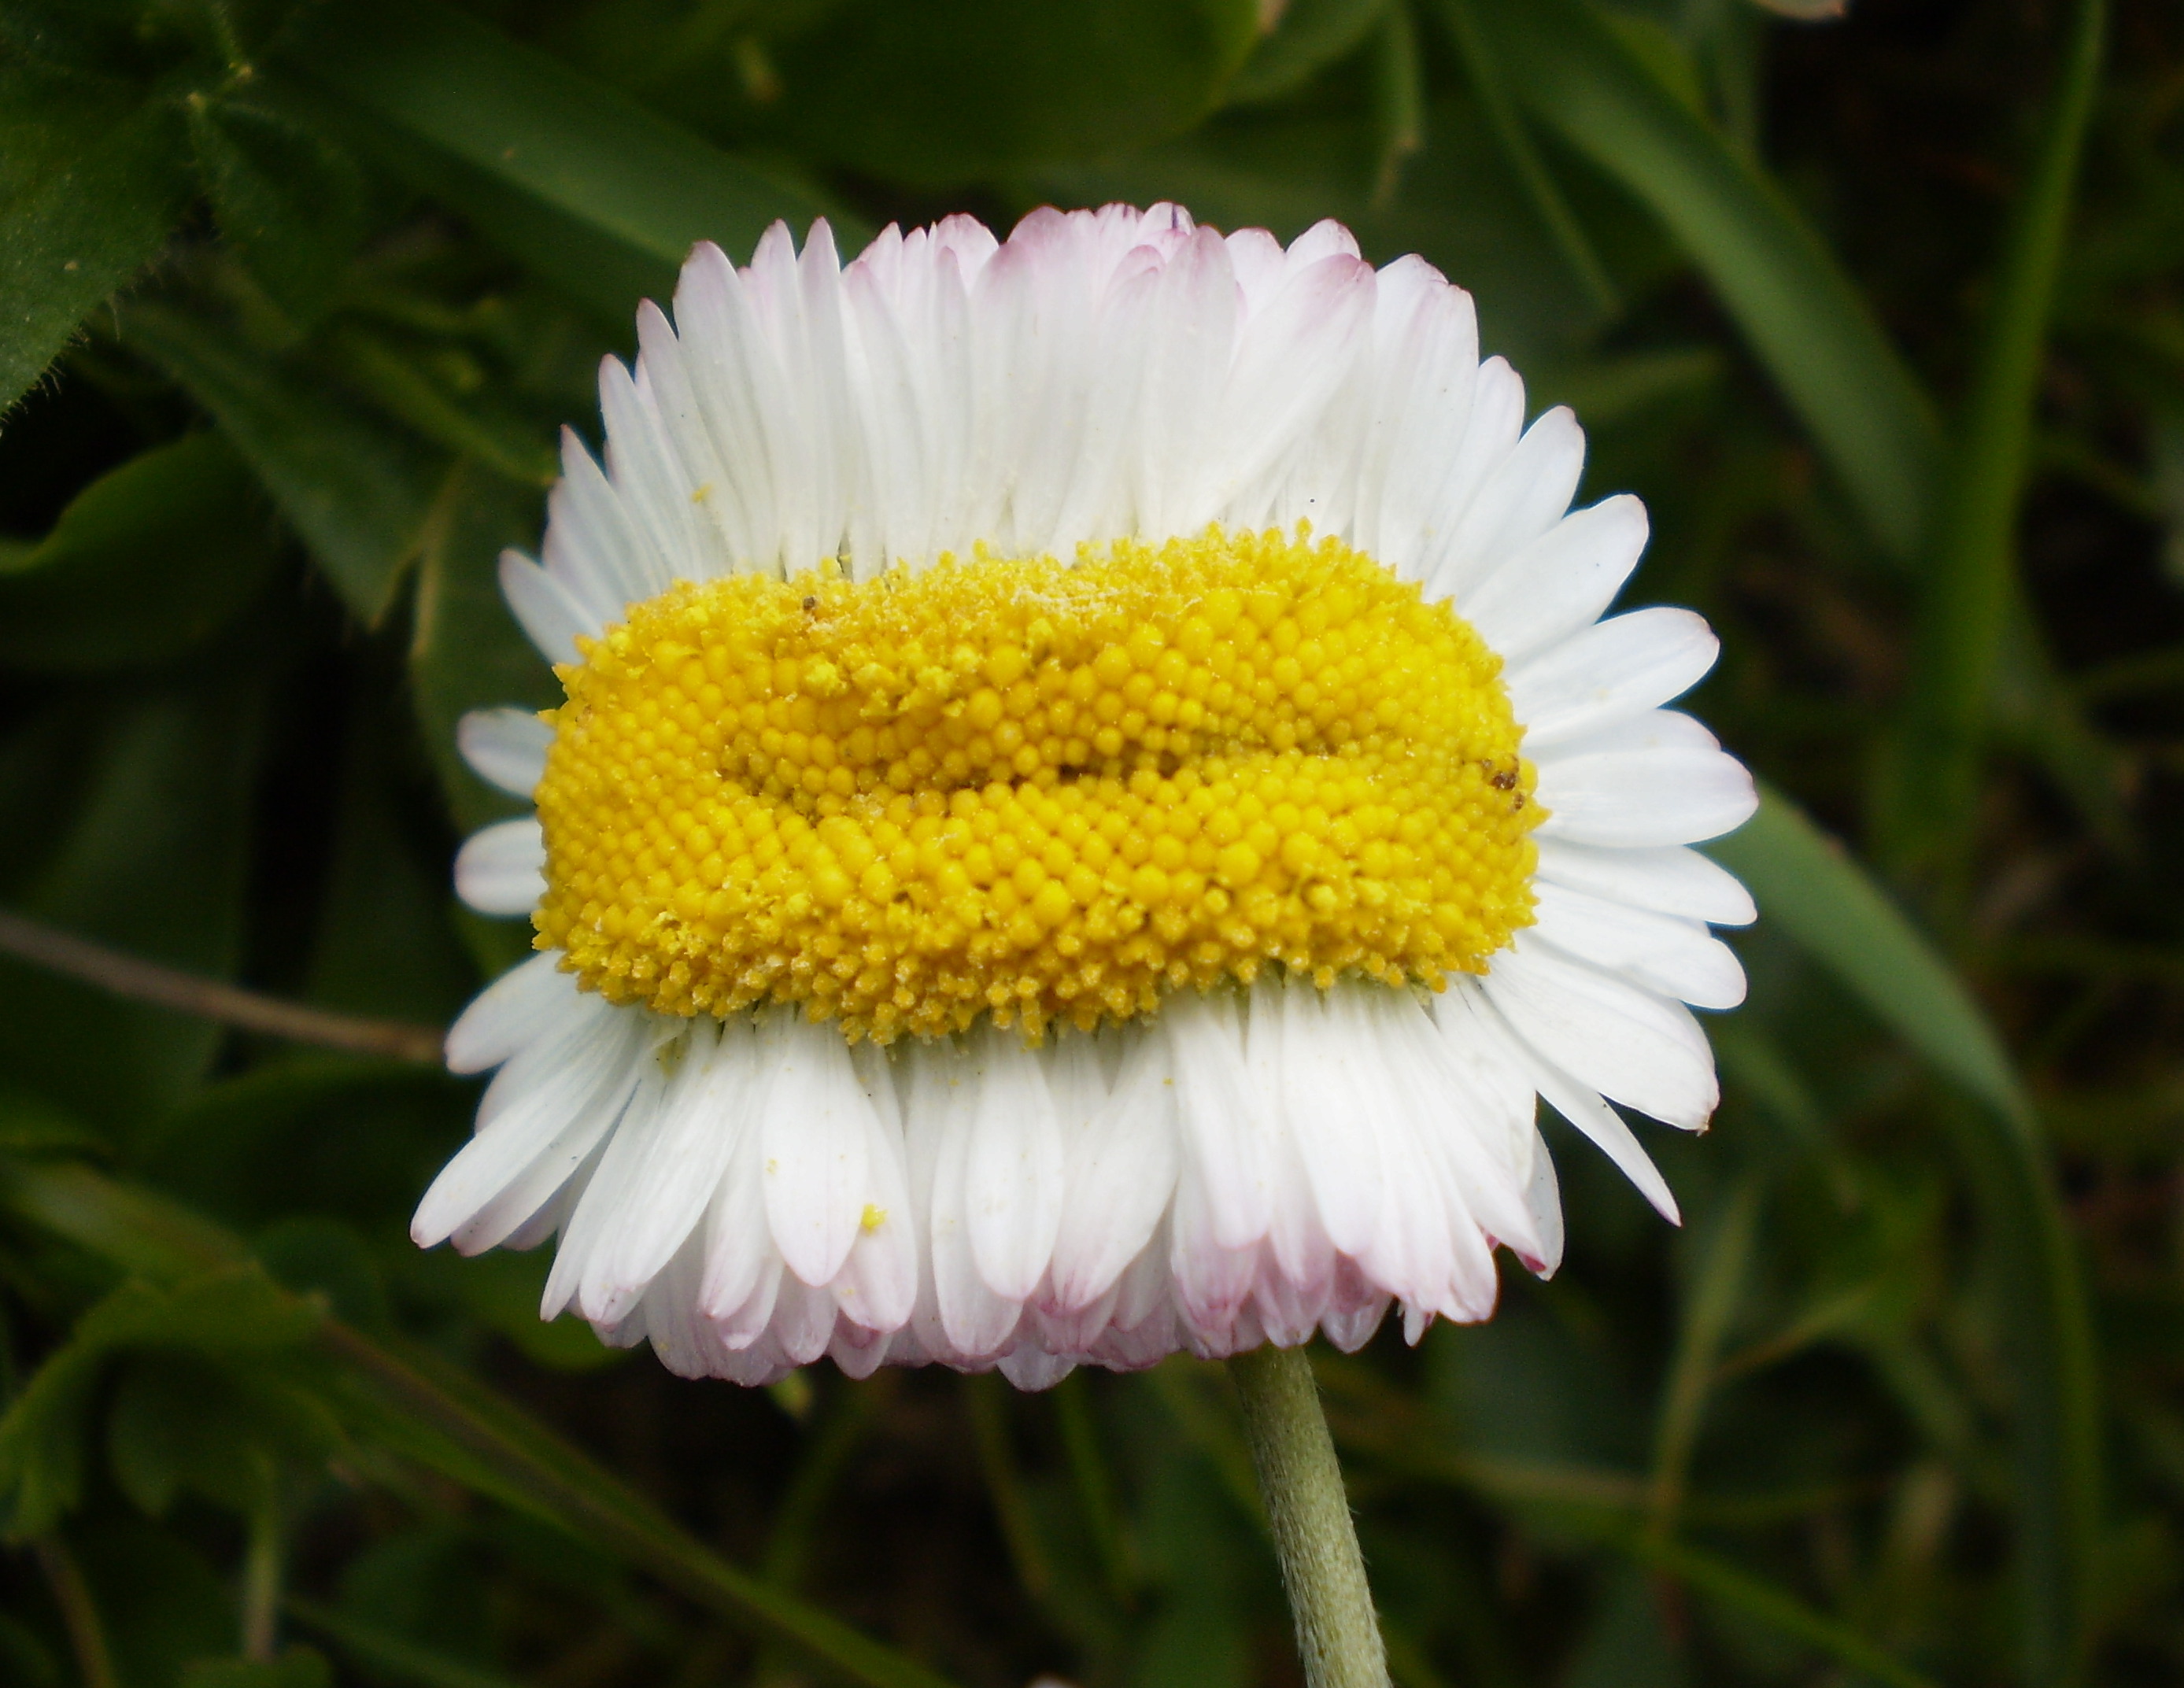 File:Mutant daisy.jpg - Wikimedia Commons